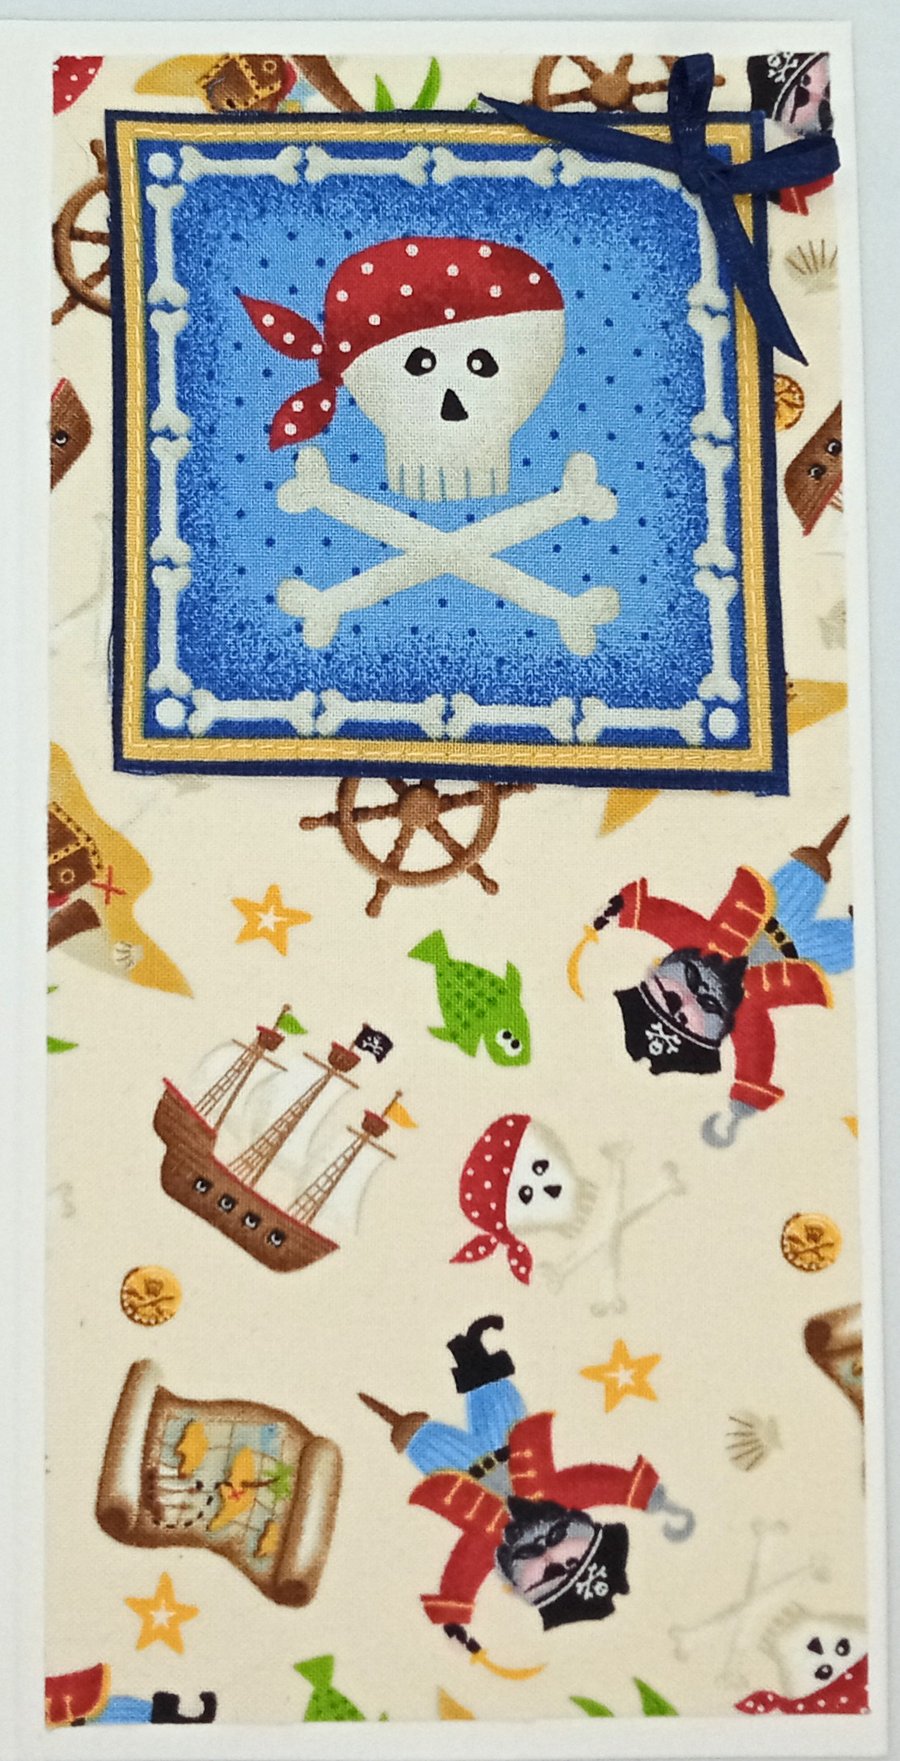 Pirate Children's Cards